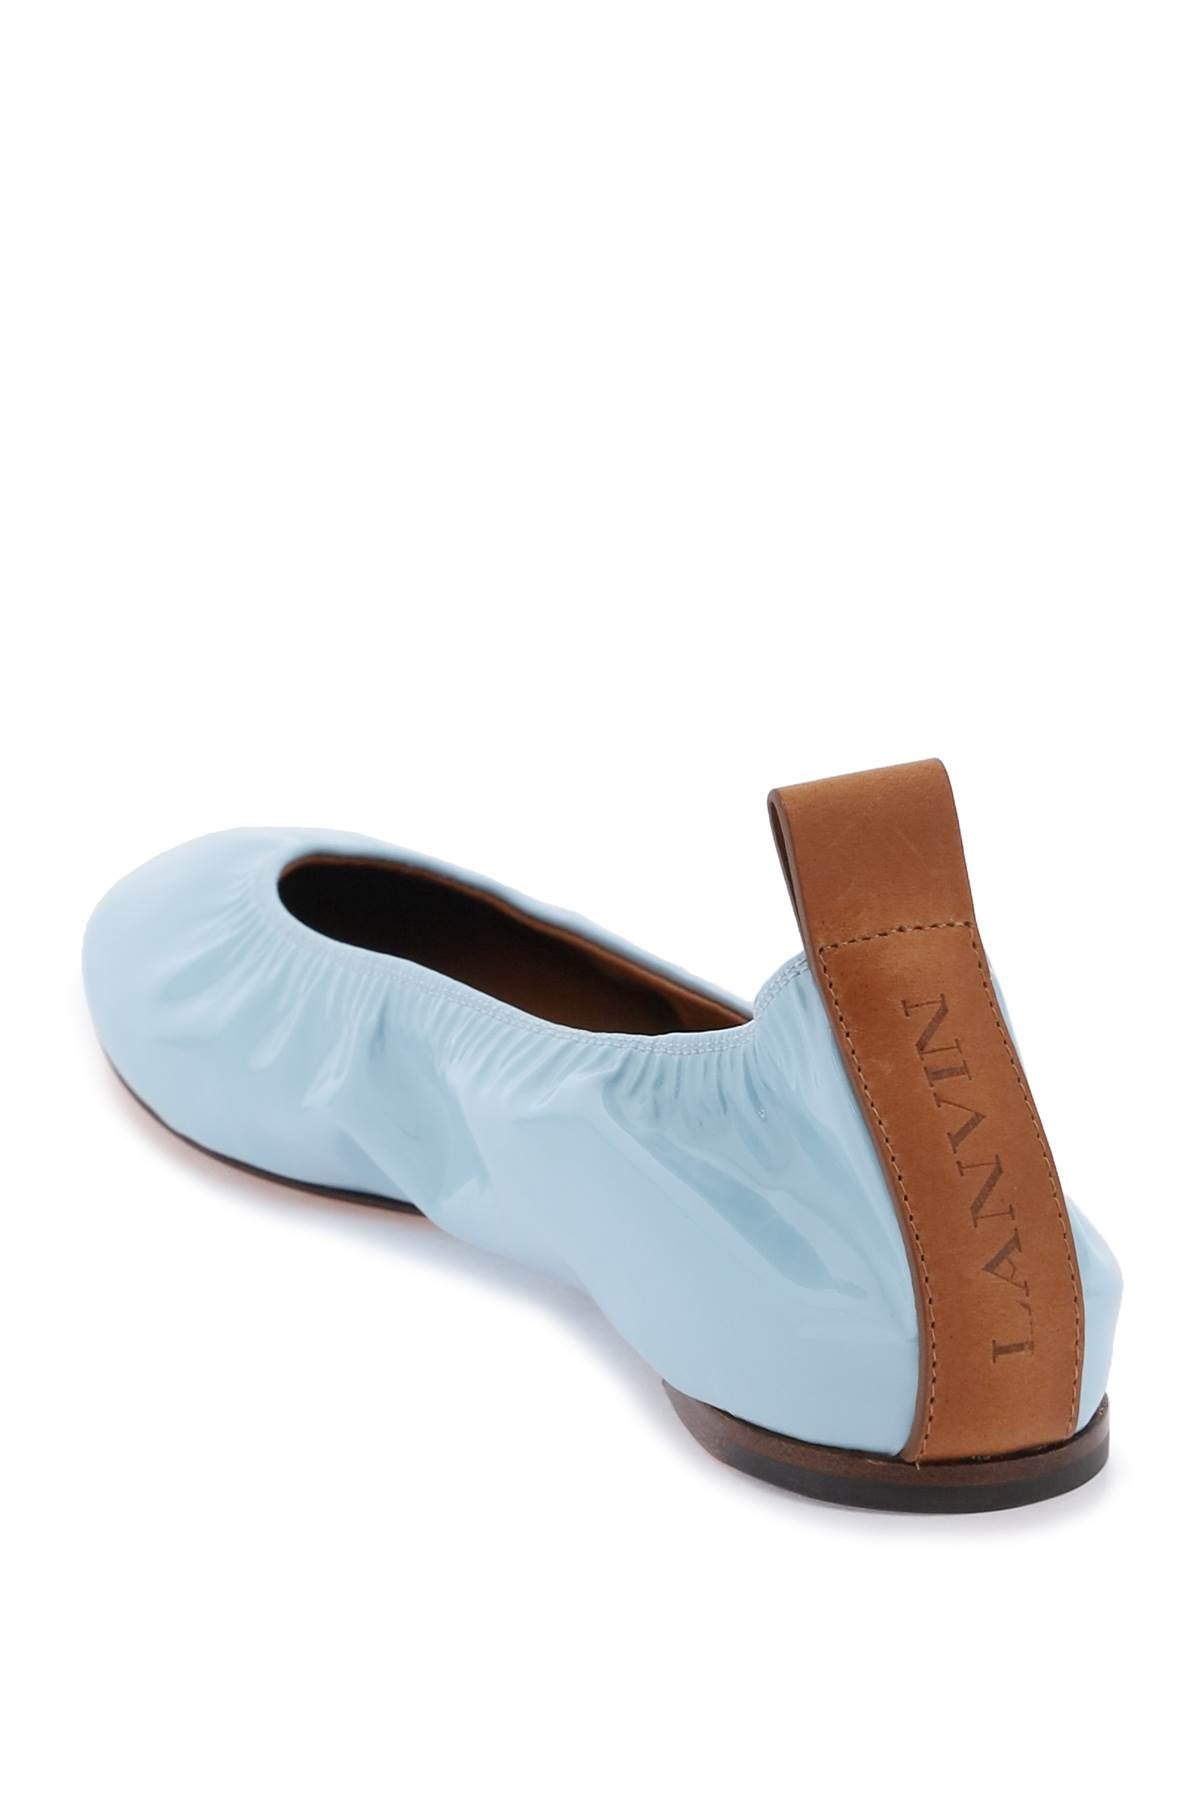 LANVIN Light Blue Patent Leather Ballerina Flats for Women